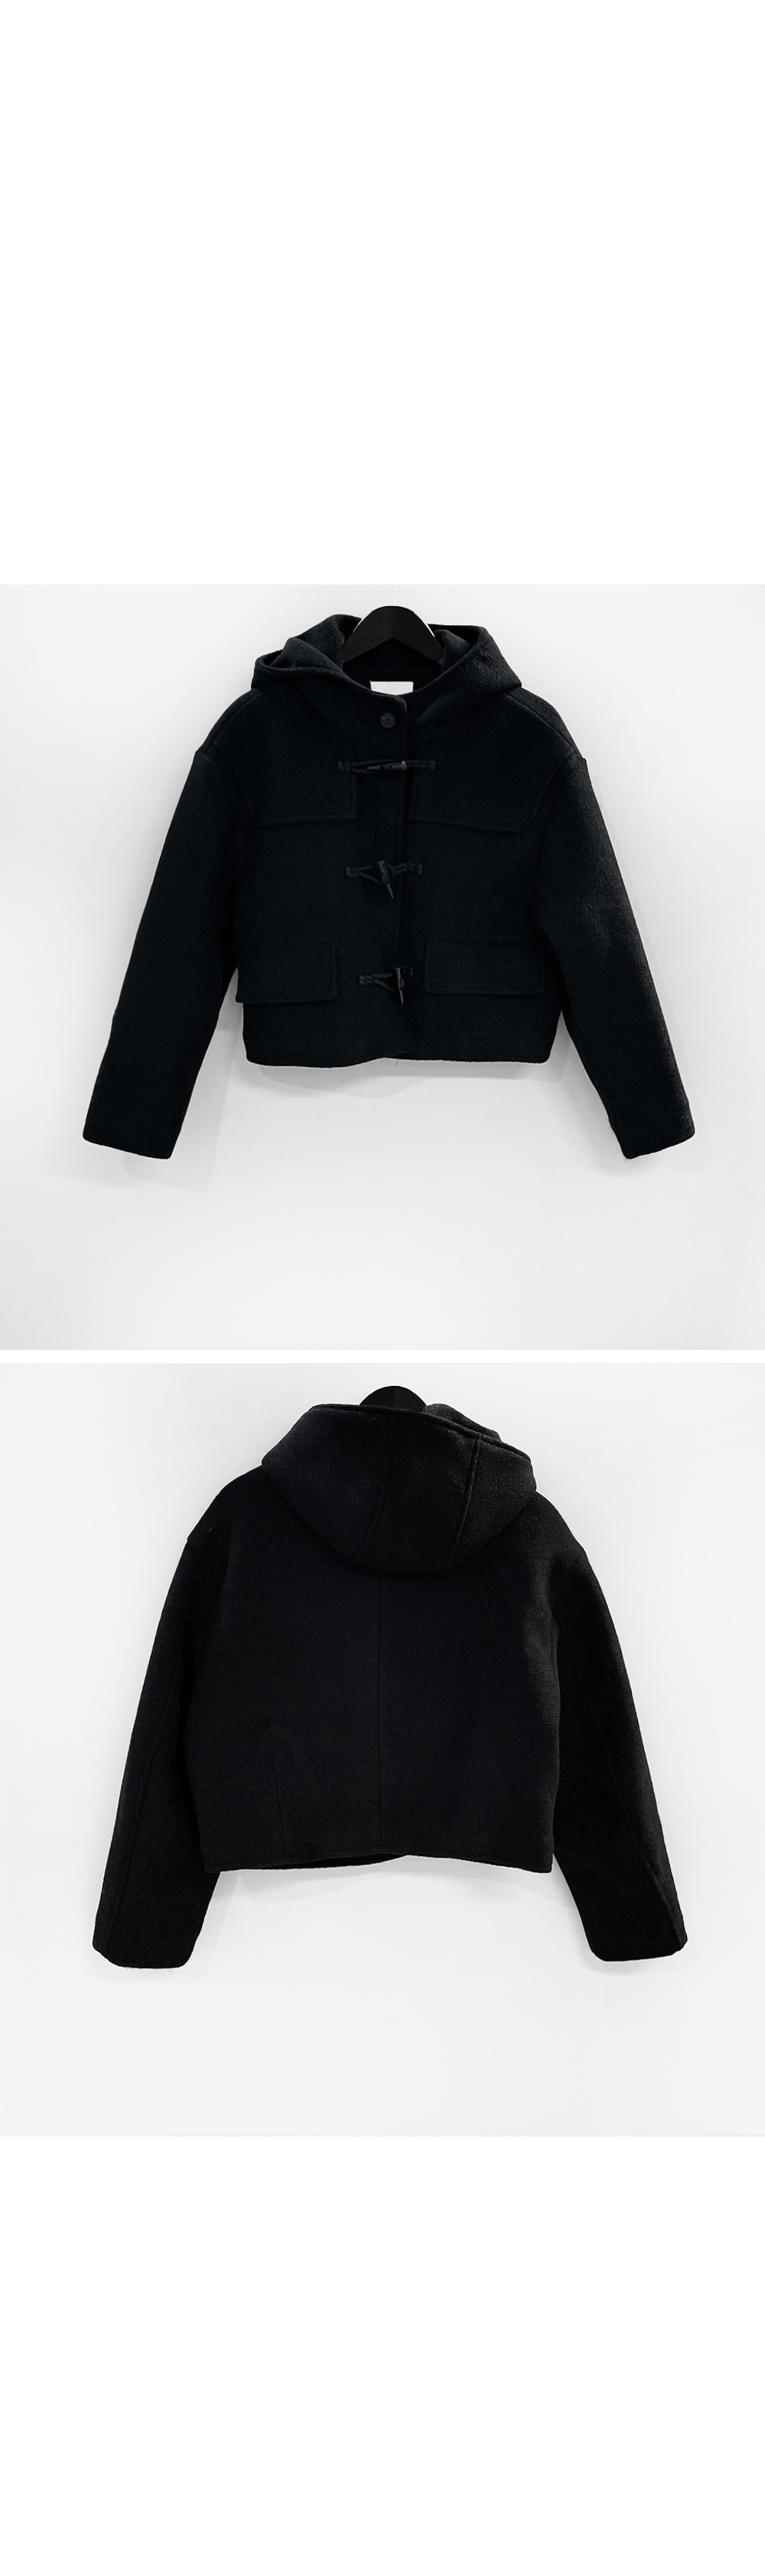 jacket charcoal color image-S1L13